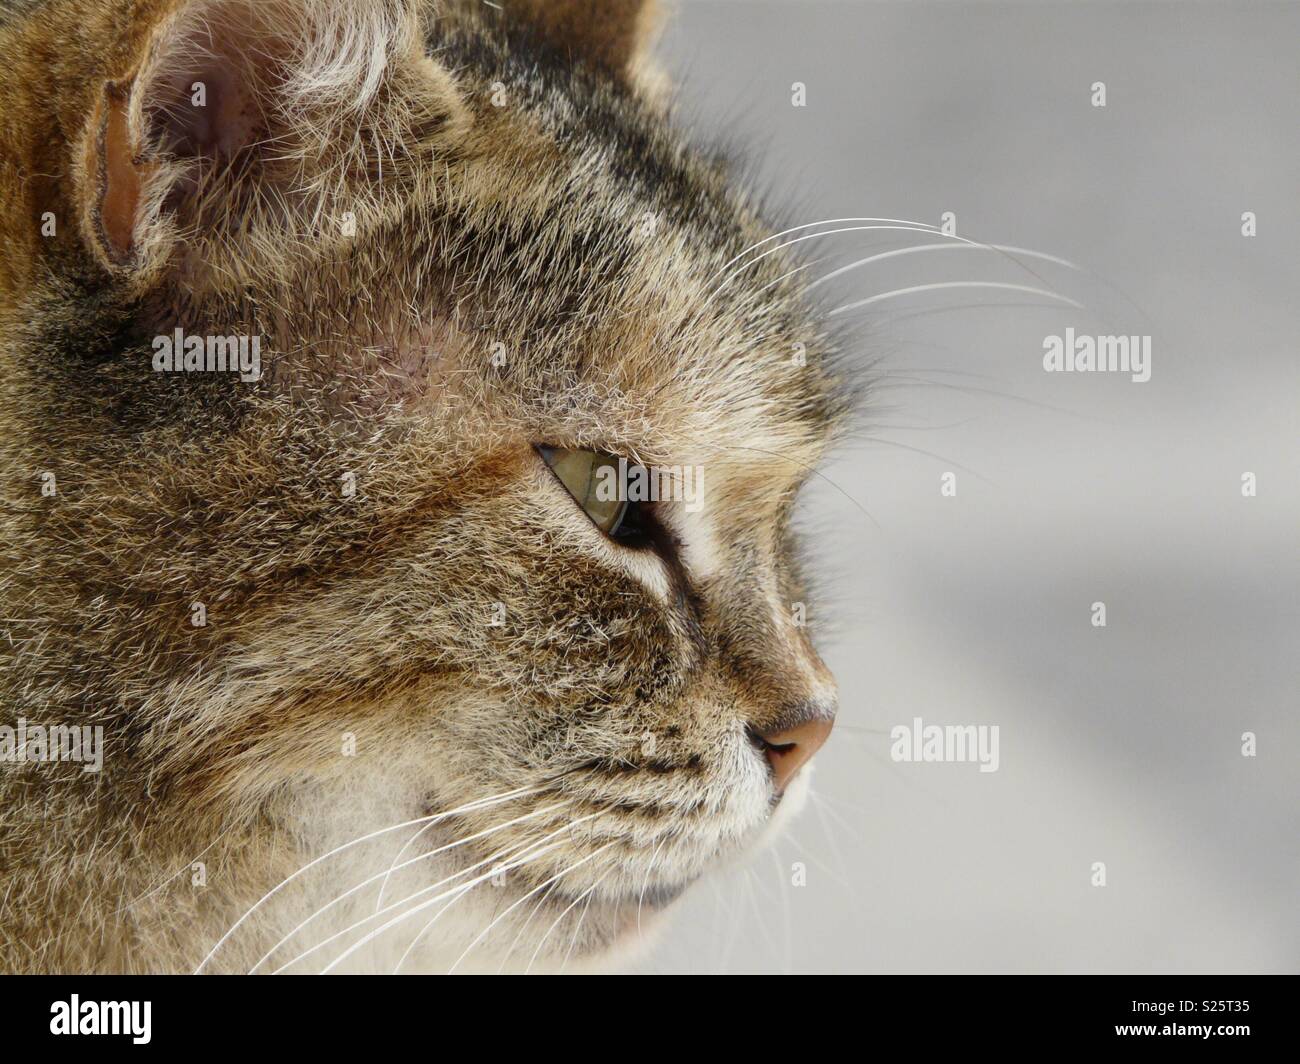 Tabby cat face close up Stock Photo